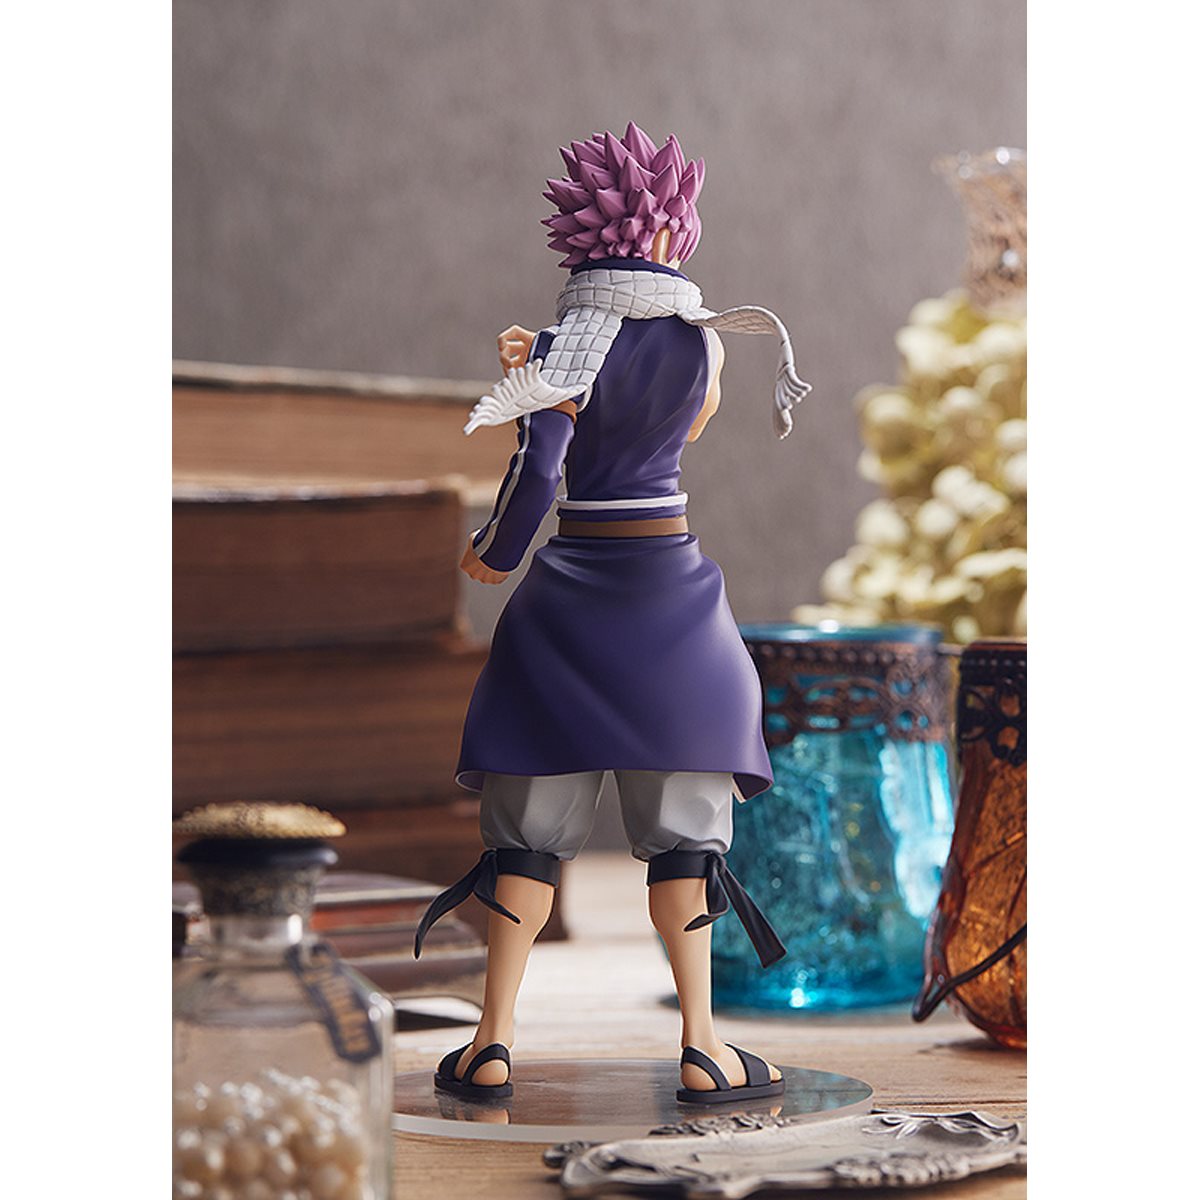 Fairy Tail Final Season Natsu Dragneel Collectible PVC Figure